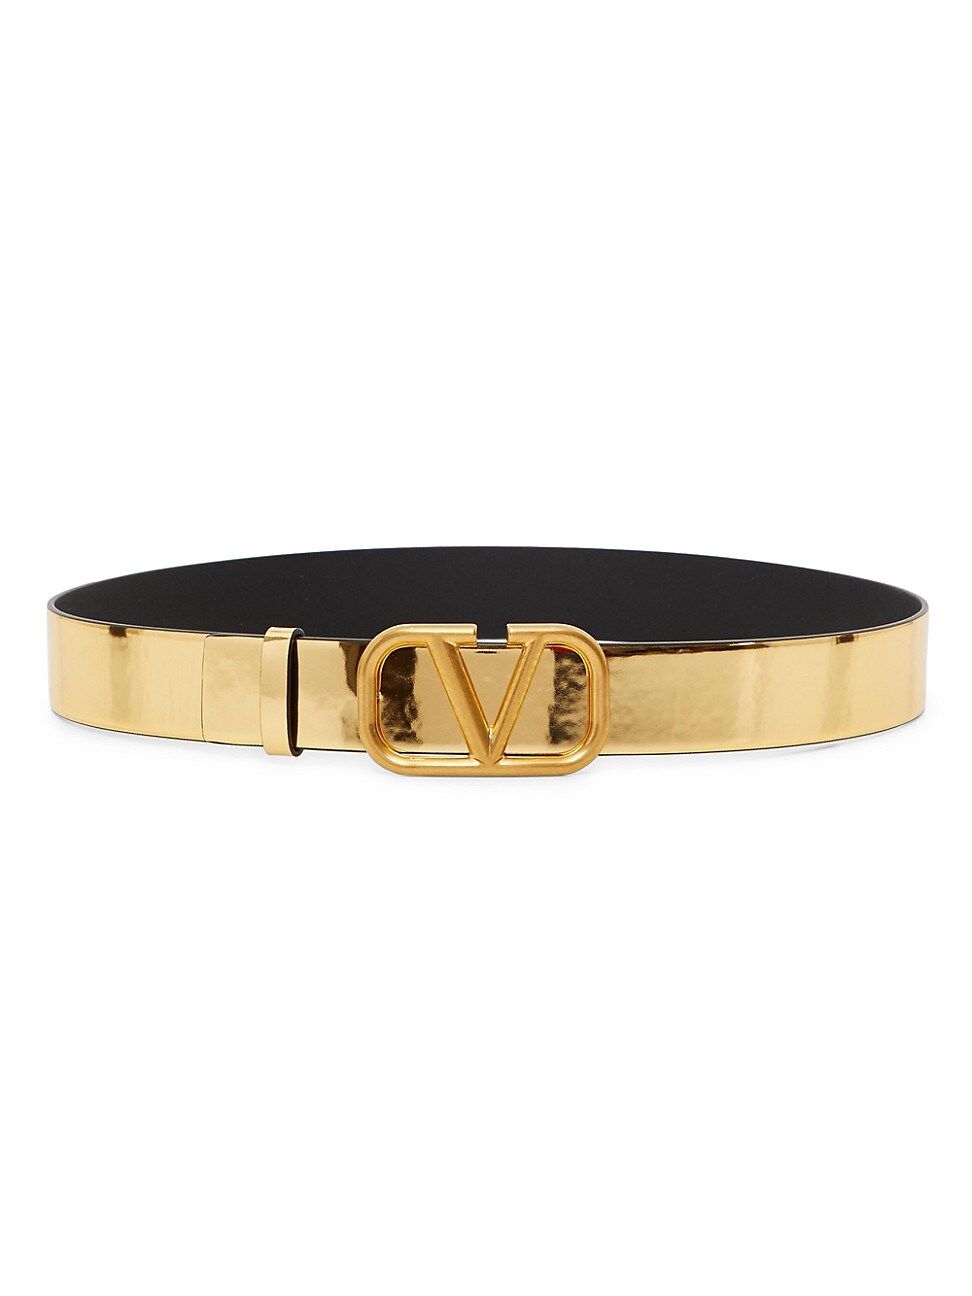 VLogo Metallic Leather Belt | Saks Fifth Avenue